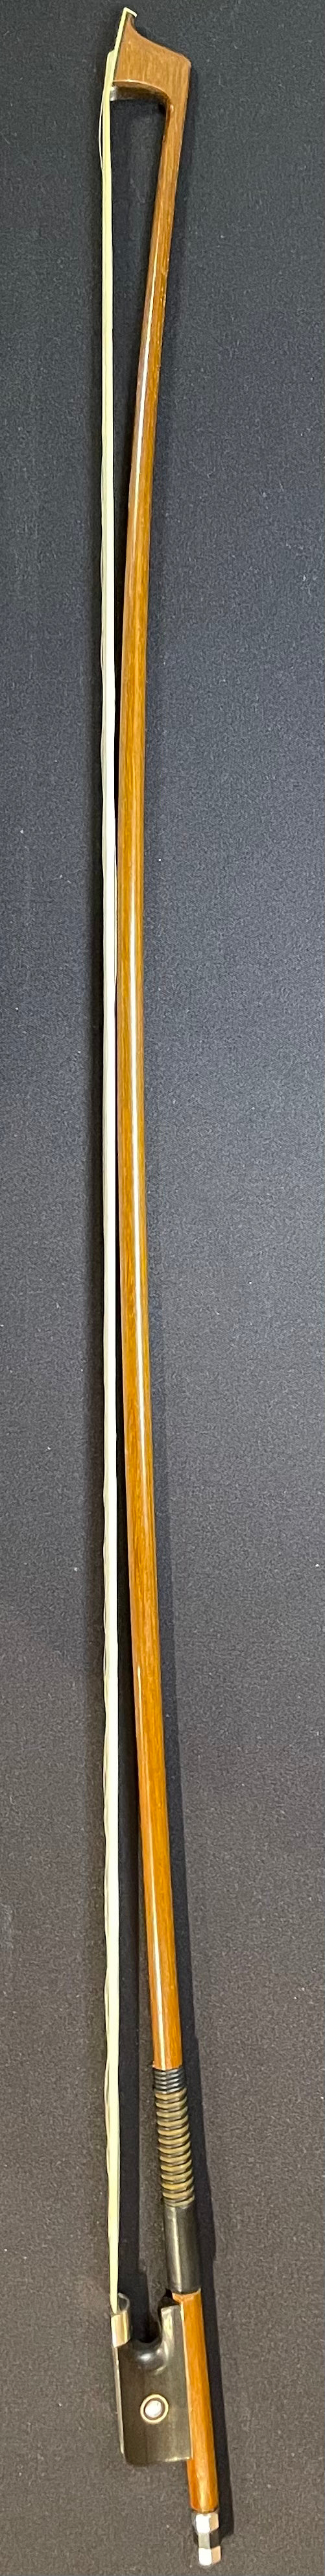 Full Size Viola Bow - DT25 Wood Model